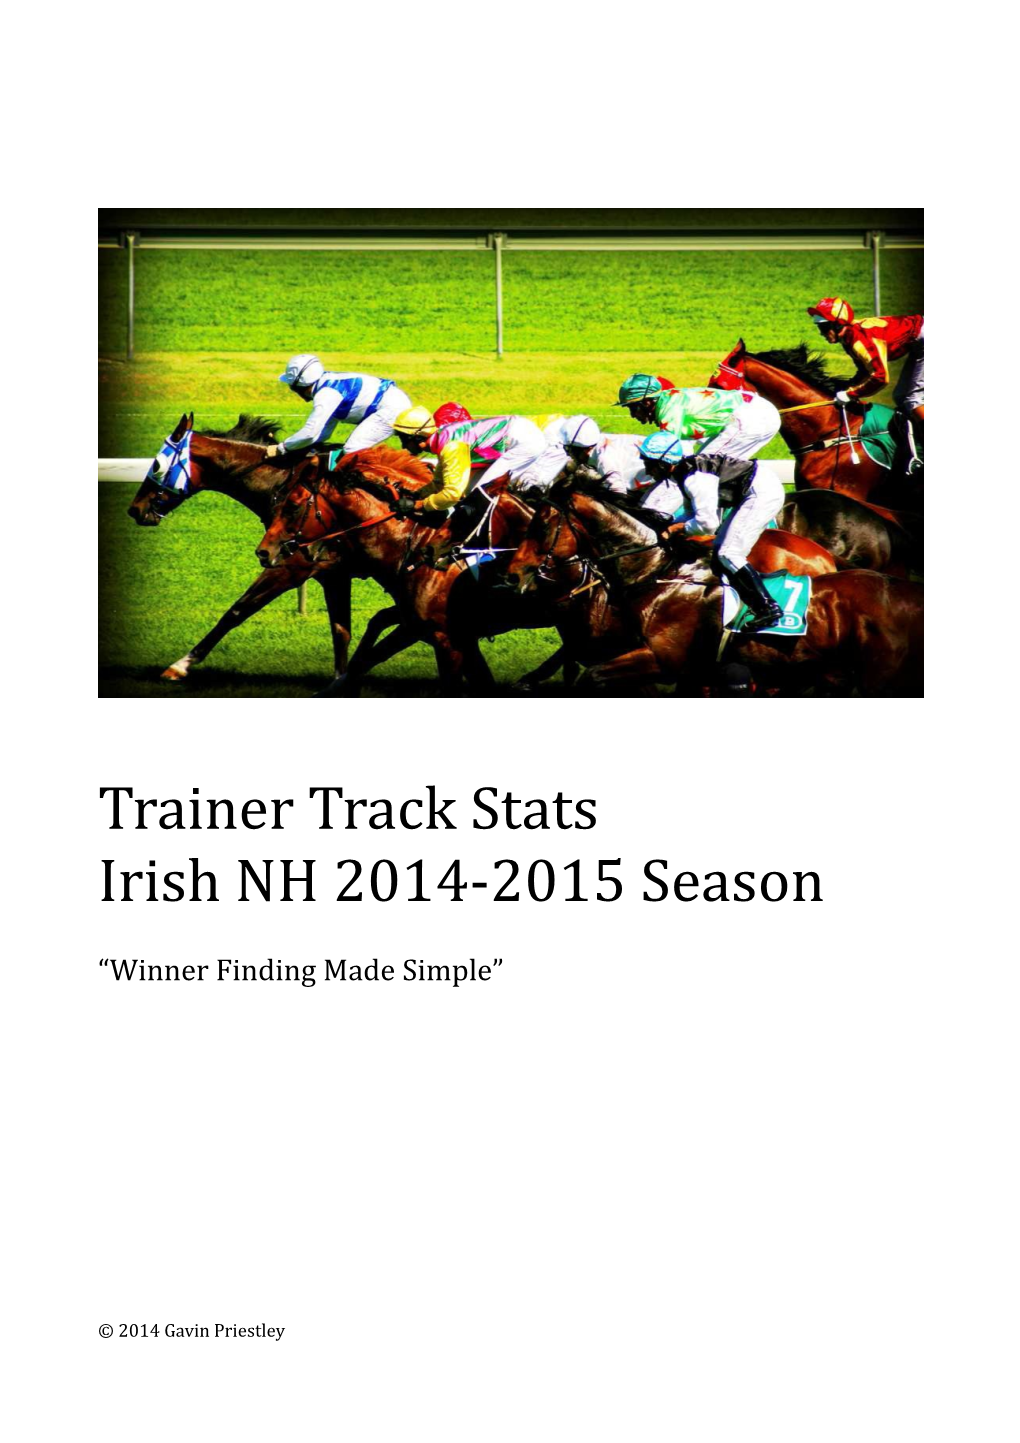 Trainer Track Stats Irish NH 2014-2015 Season